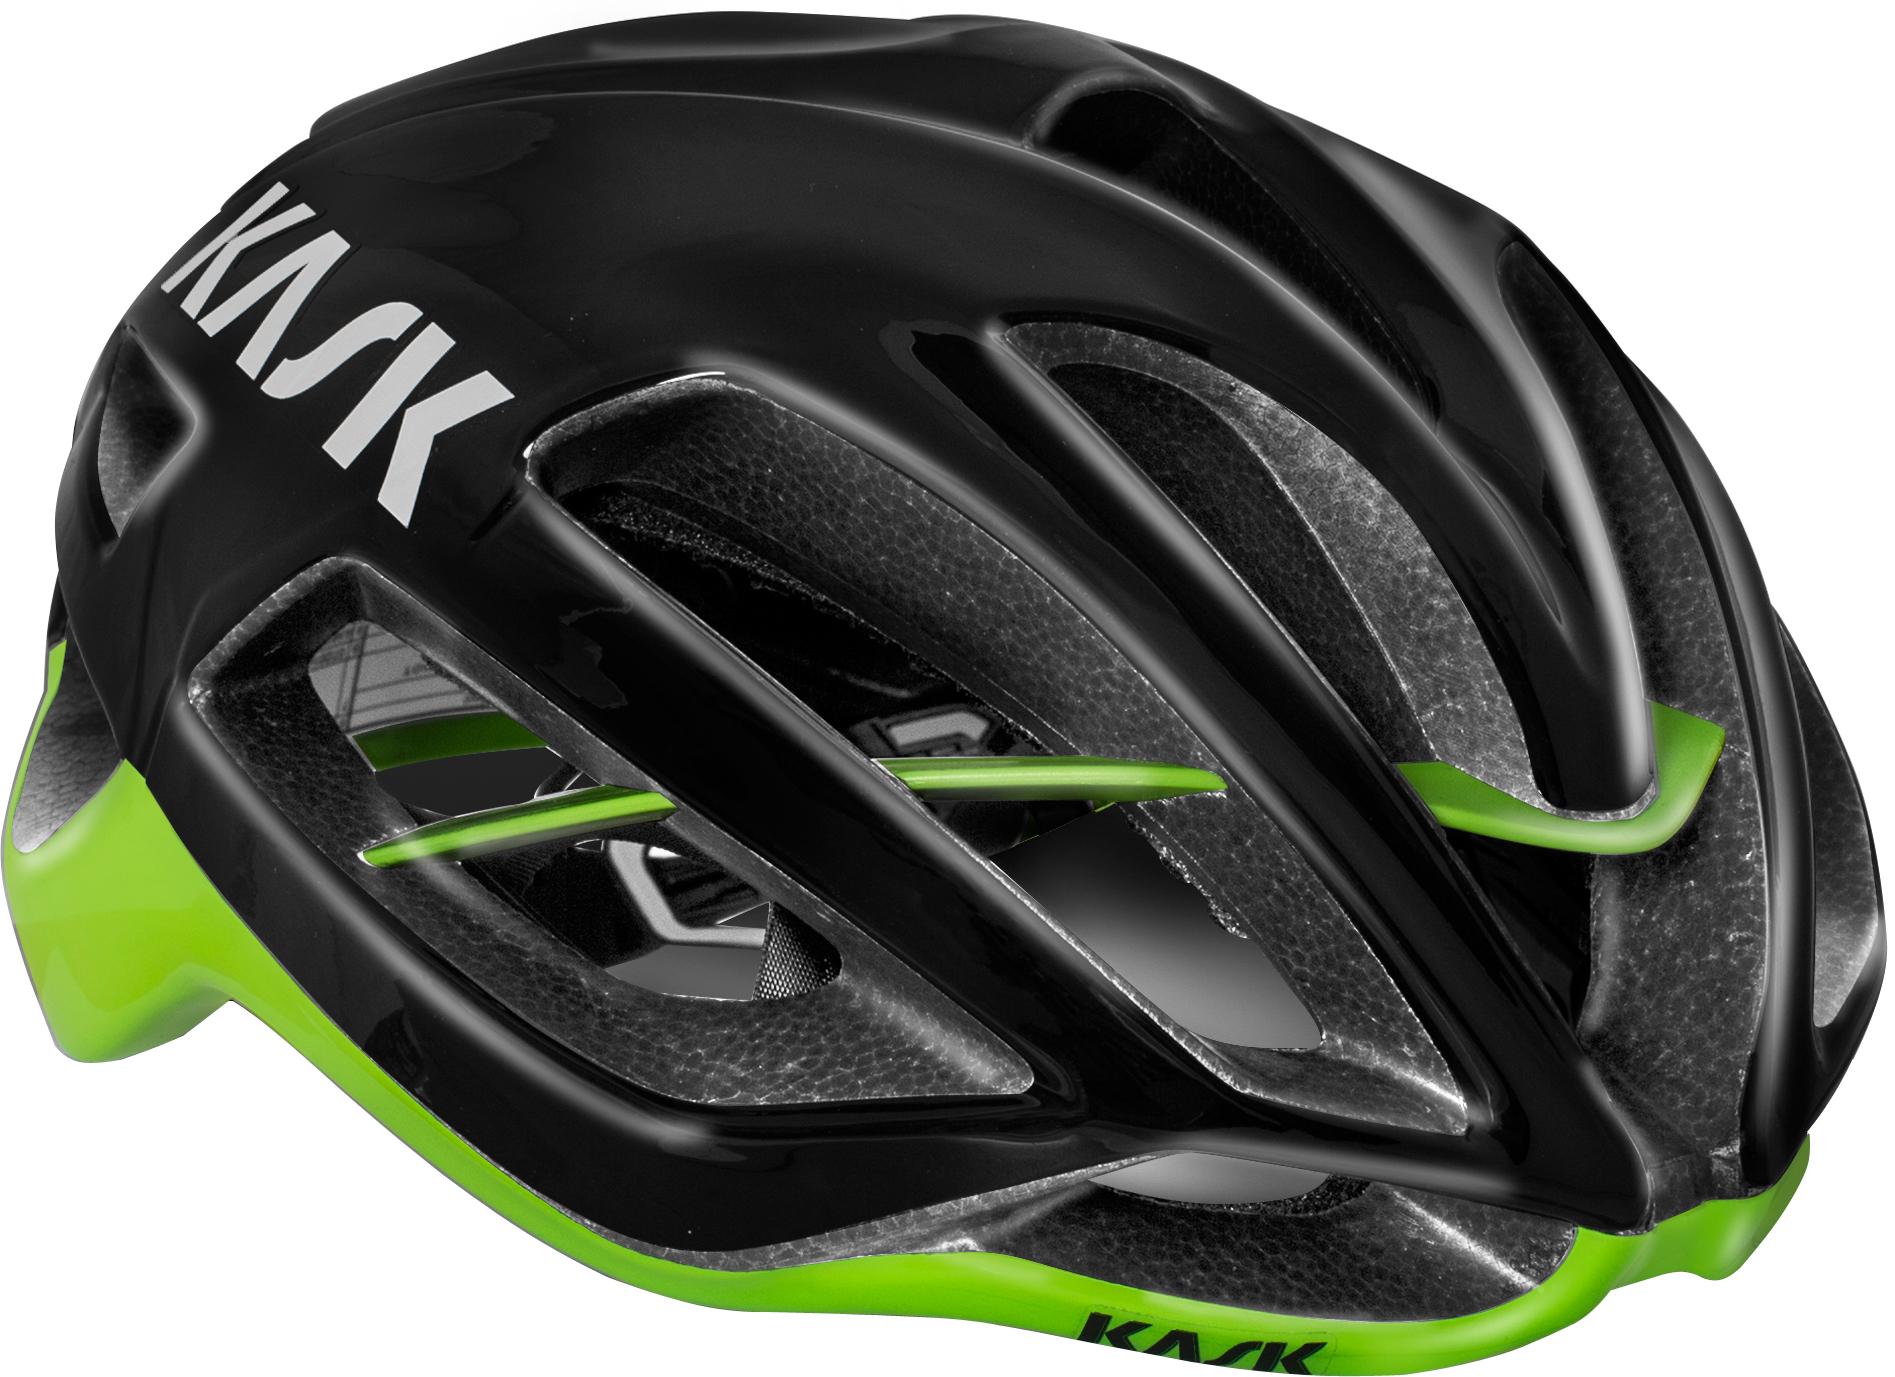 Kask Protone Road Helmet - Black/lime